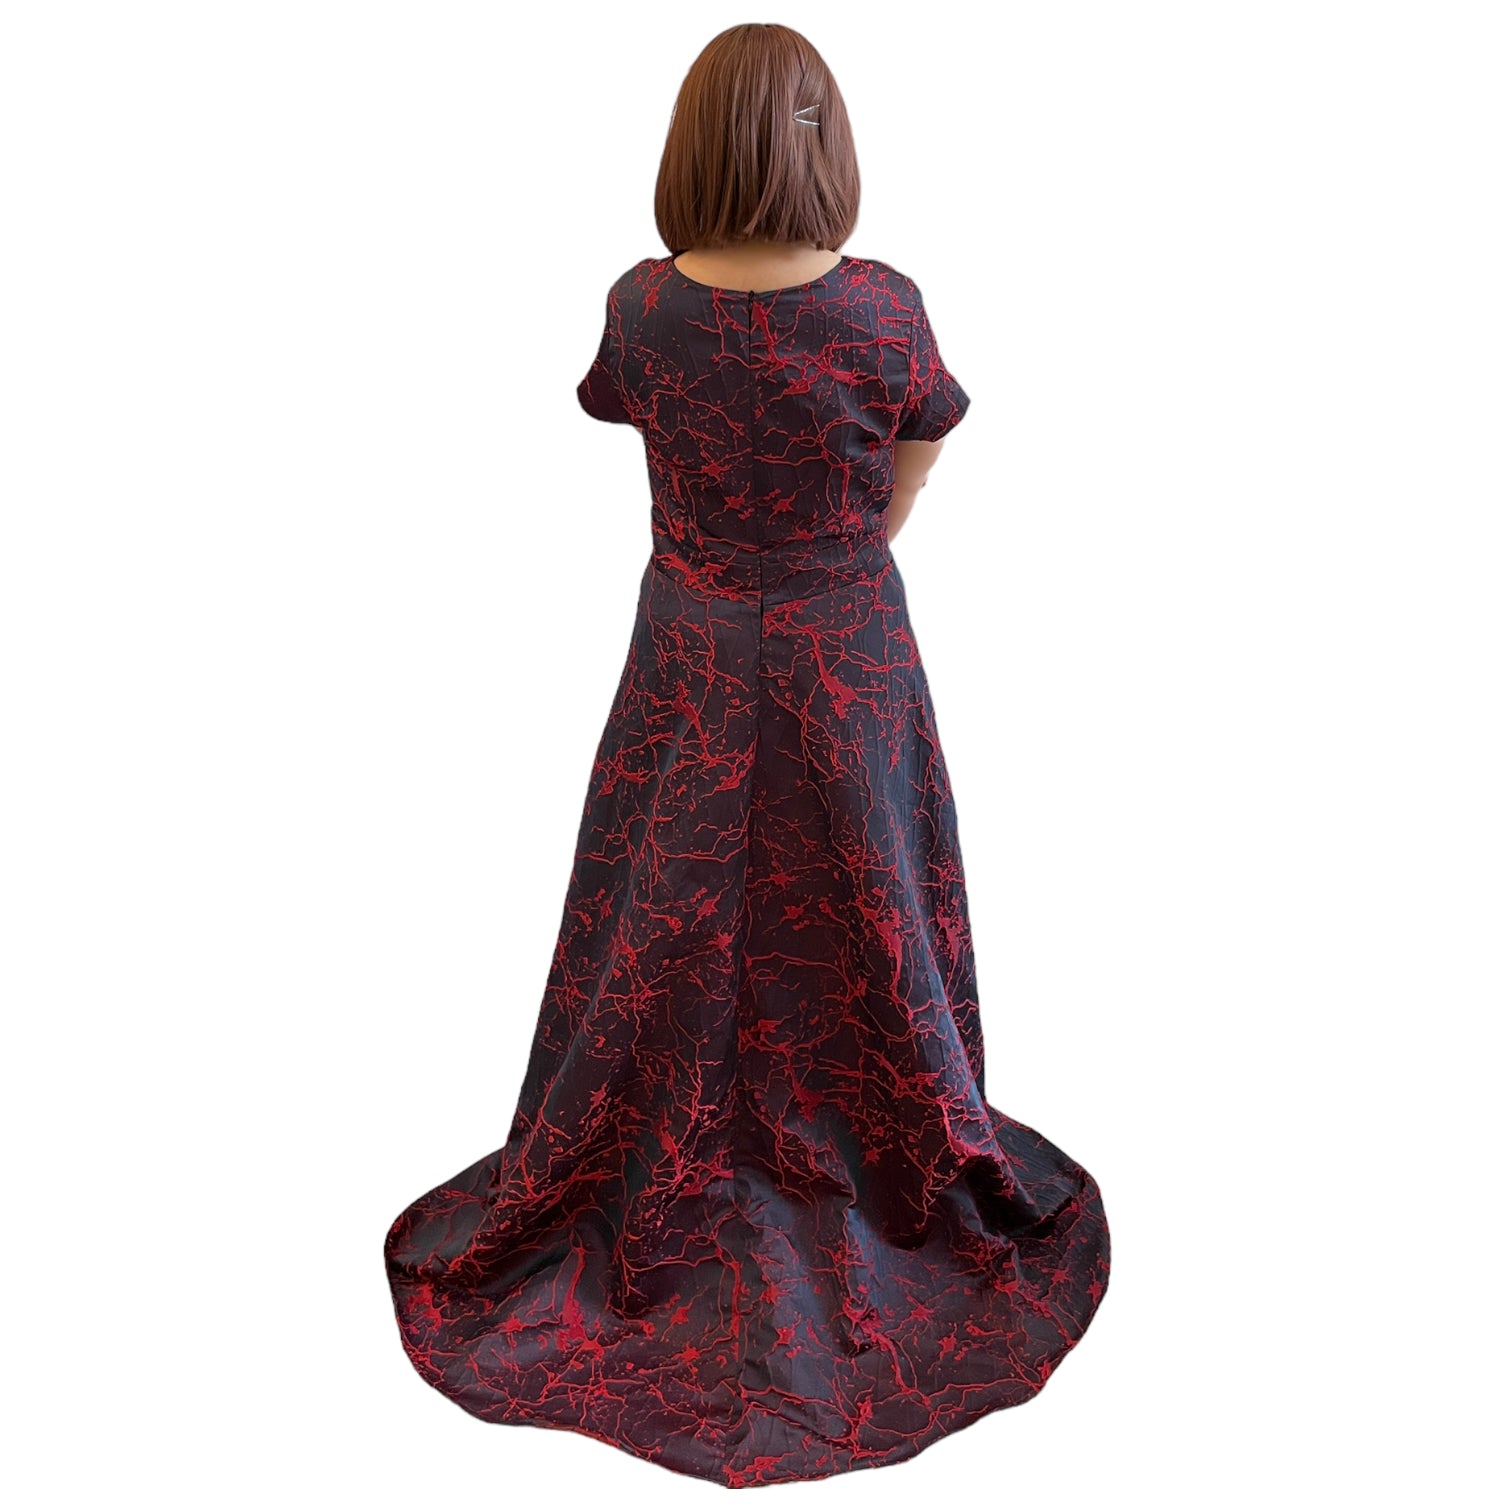 SOIREE - RED NAVY HIGH LOW HEM CUSTOMIZABLE EVENING DRESS